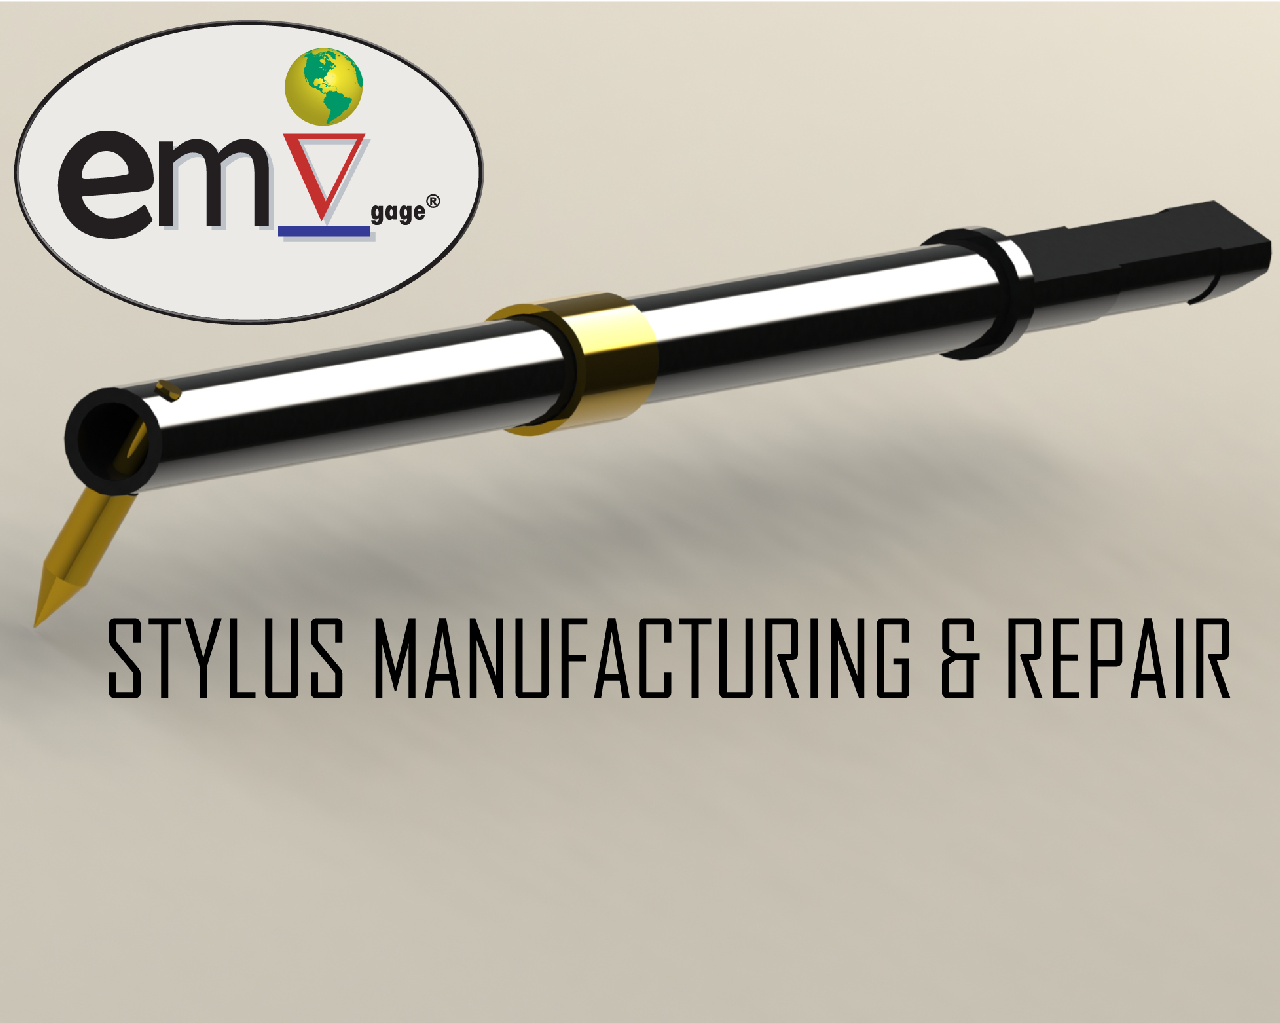 EMI Stylus Manufacturing and Repair